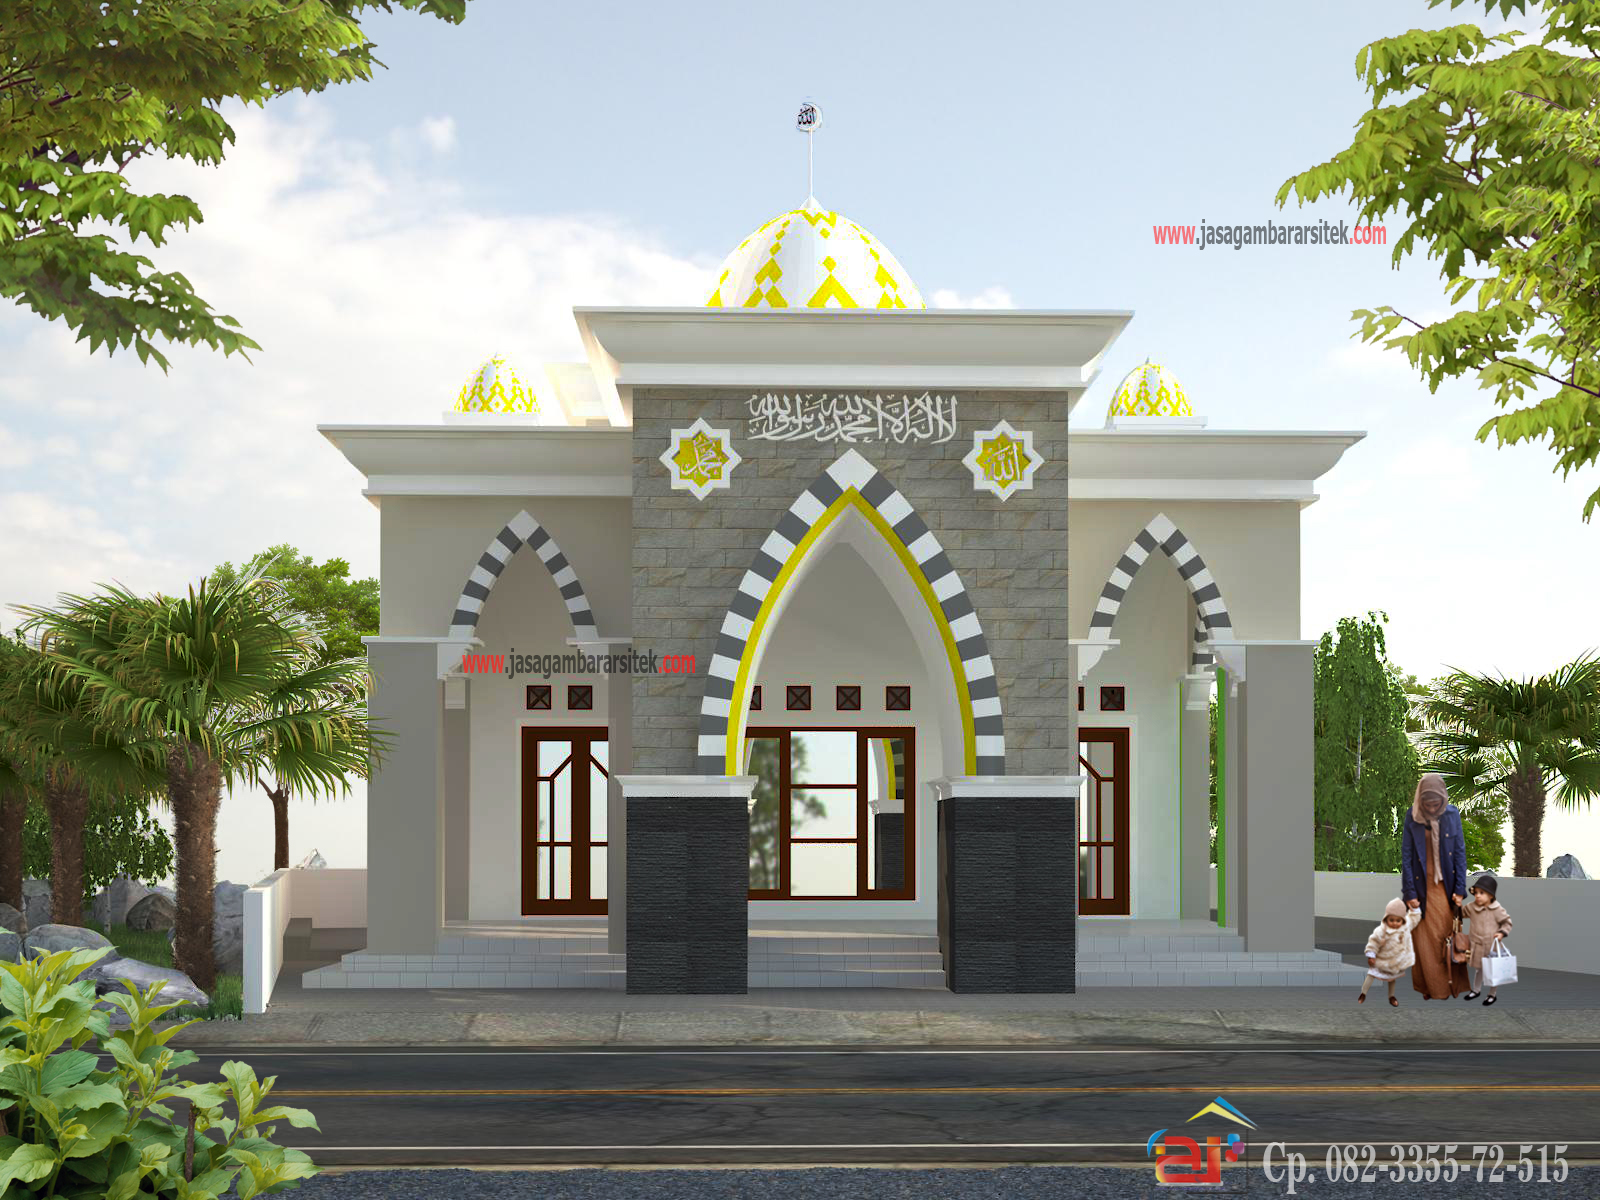 Desain Masjid Ukuran 10 X 10 Rumah Joglo Limasan Work